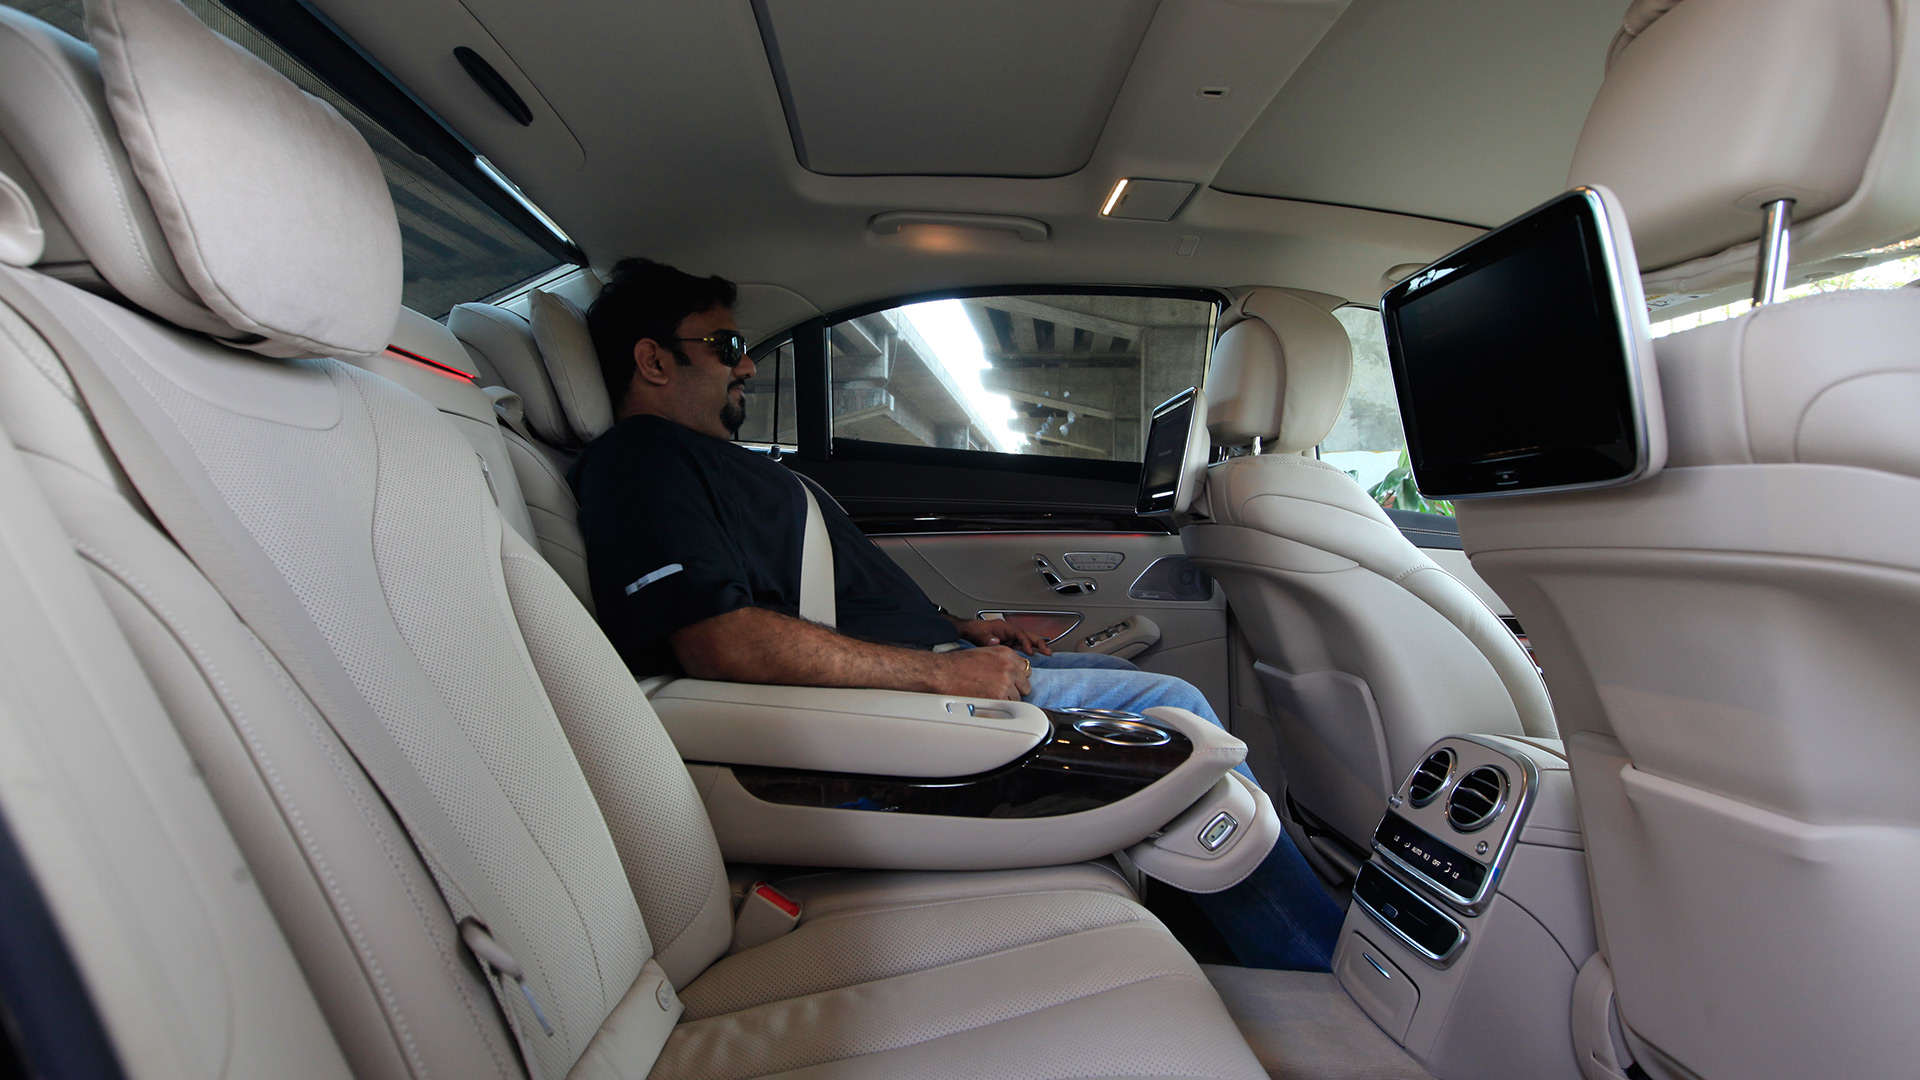 Mercedesbenz-S Class-2014 S350 CDi Interior